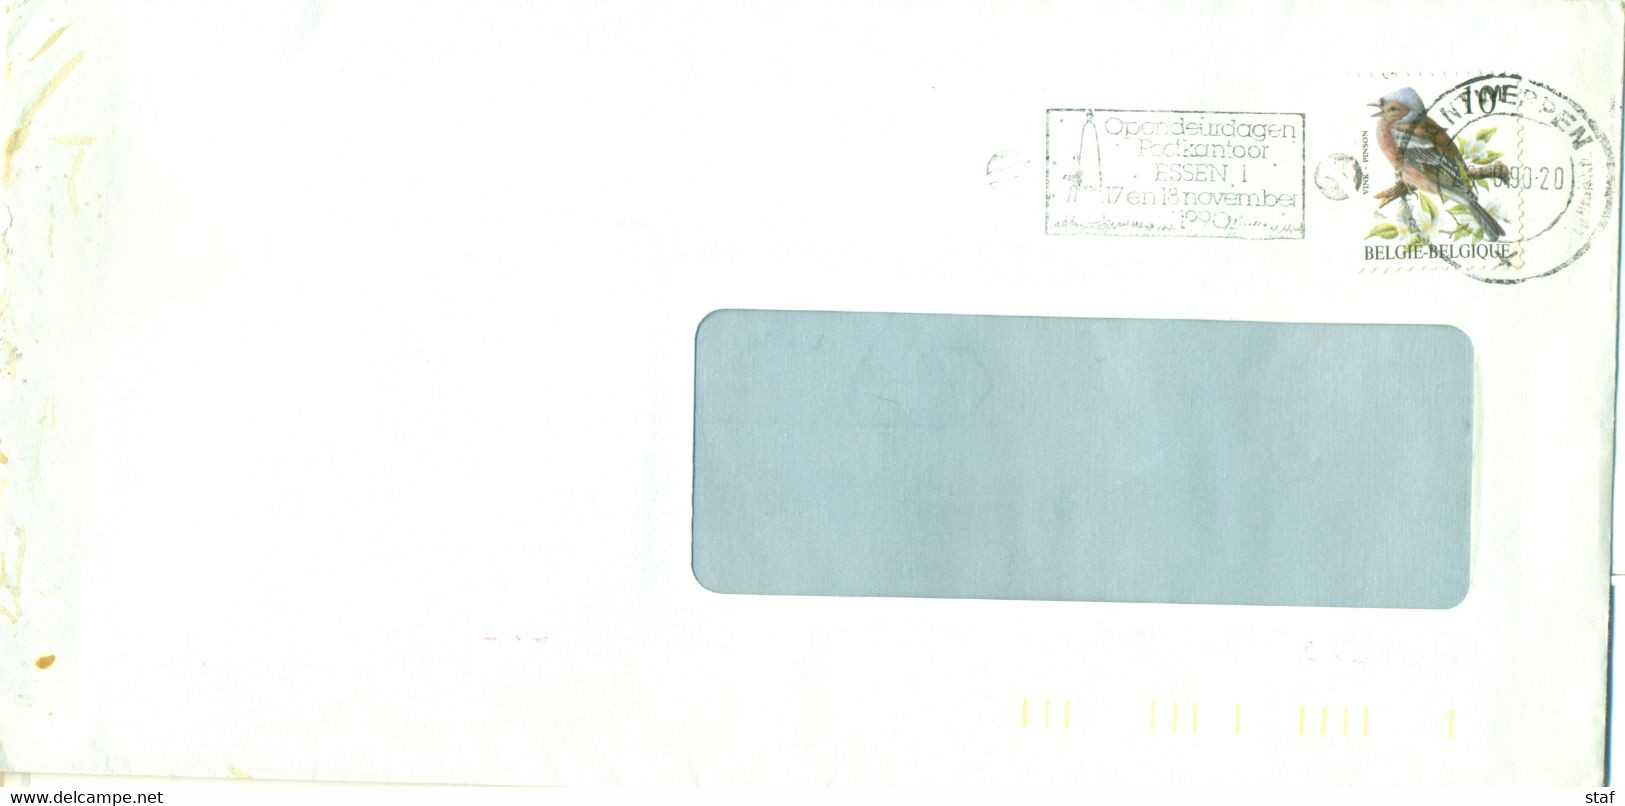 Opendeurdagen Postkantoor Essen 1 17 En 18 November 1990 - Vlagstempels